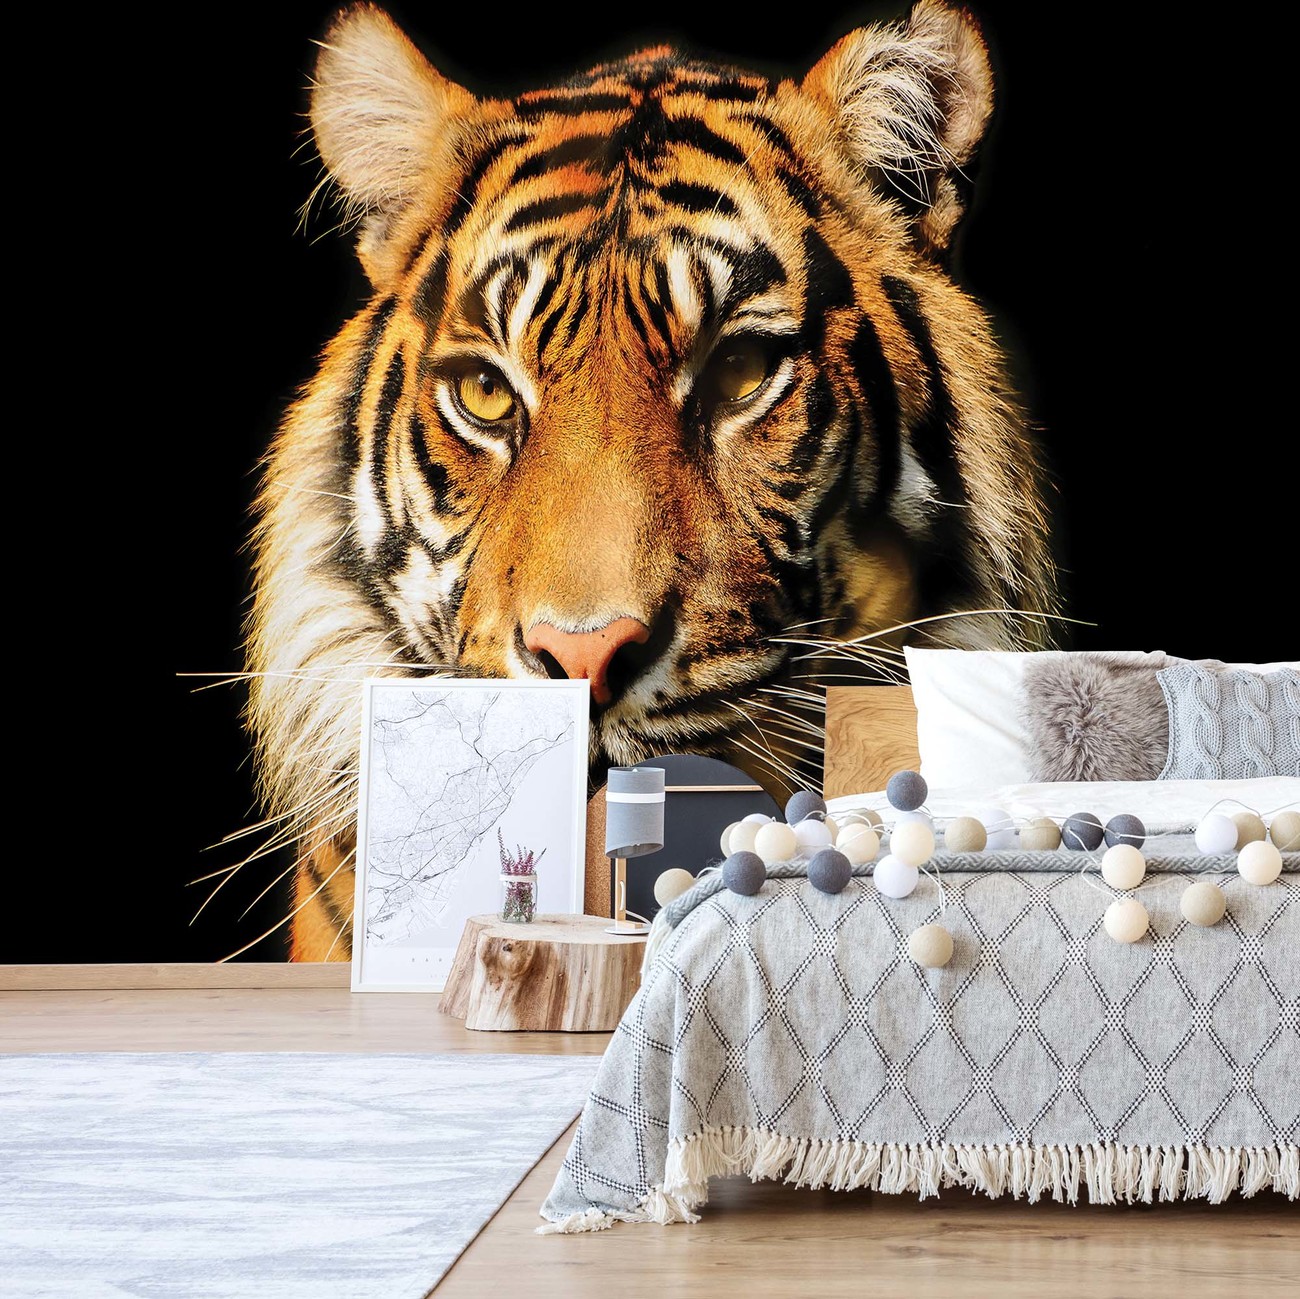 Tiger Wallpaper - Wild Edition - Big Cat Background & Jungle Animal Lock  Screen Theme.s by Darko Manic